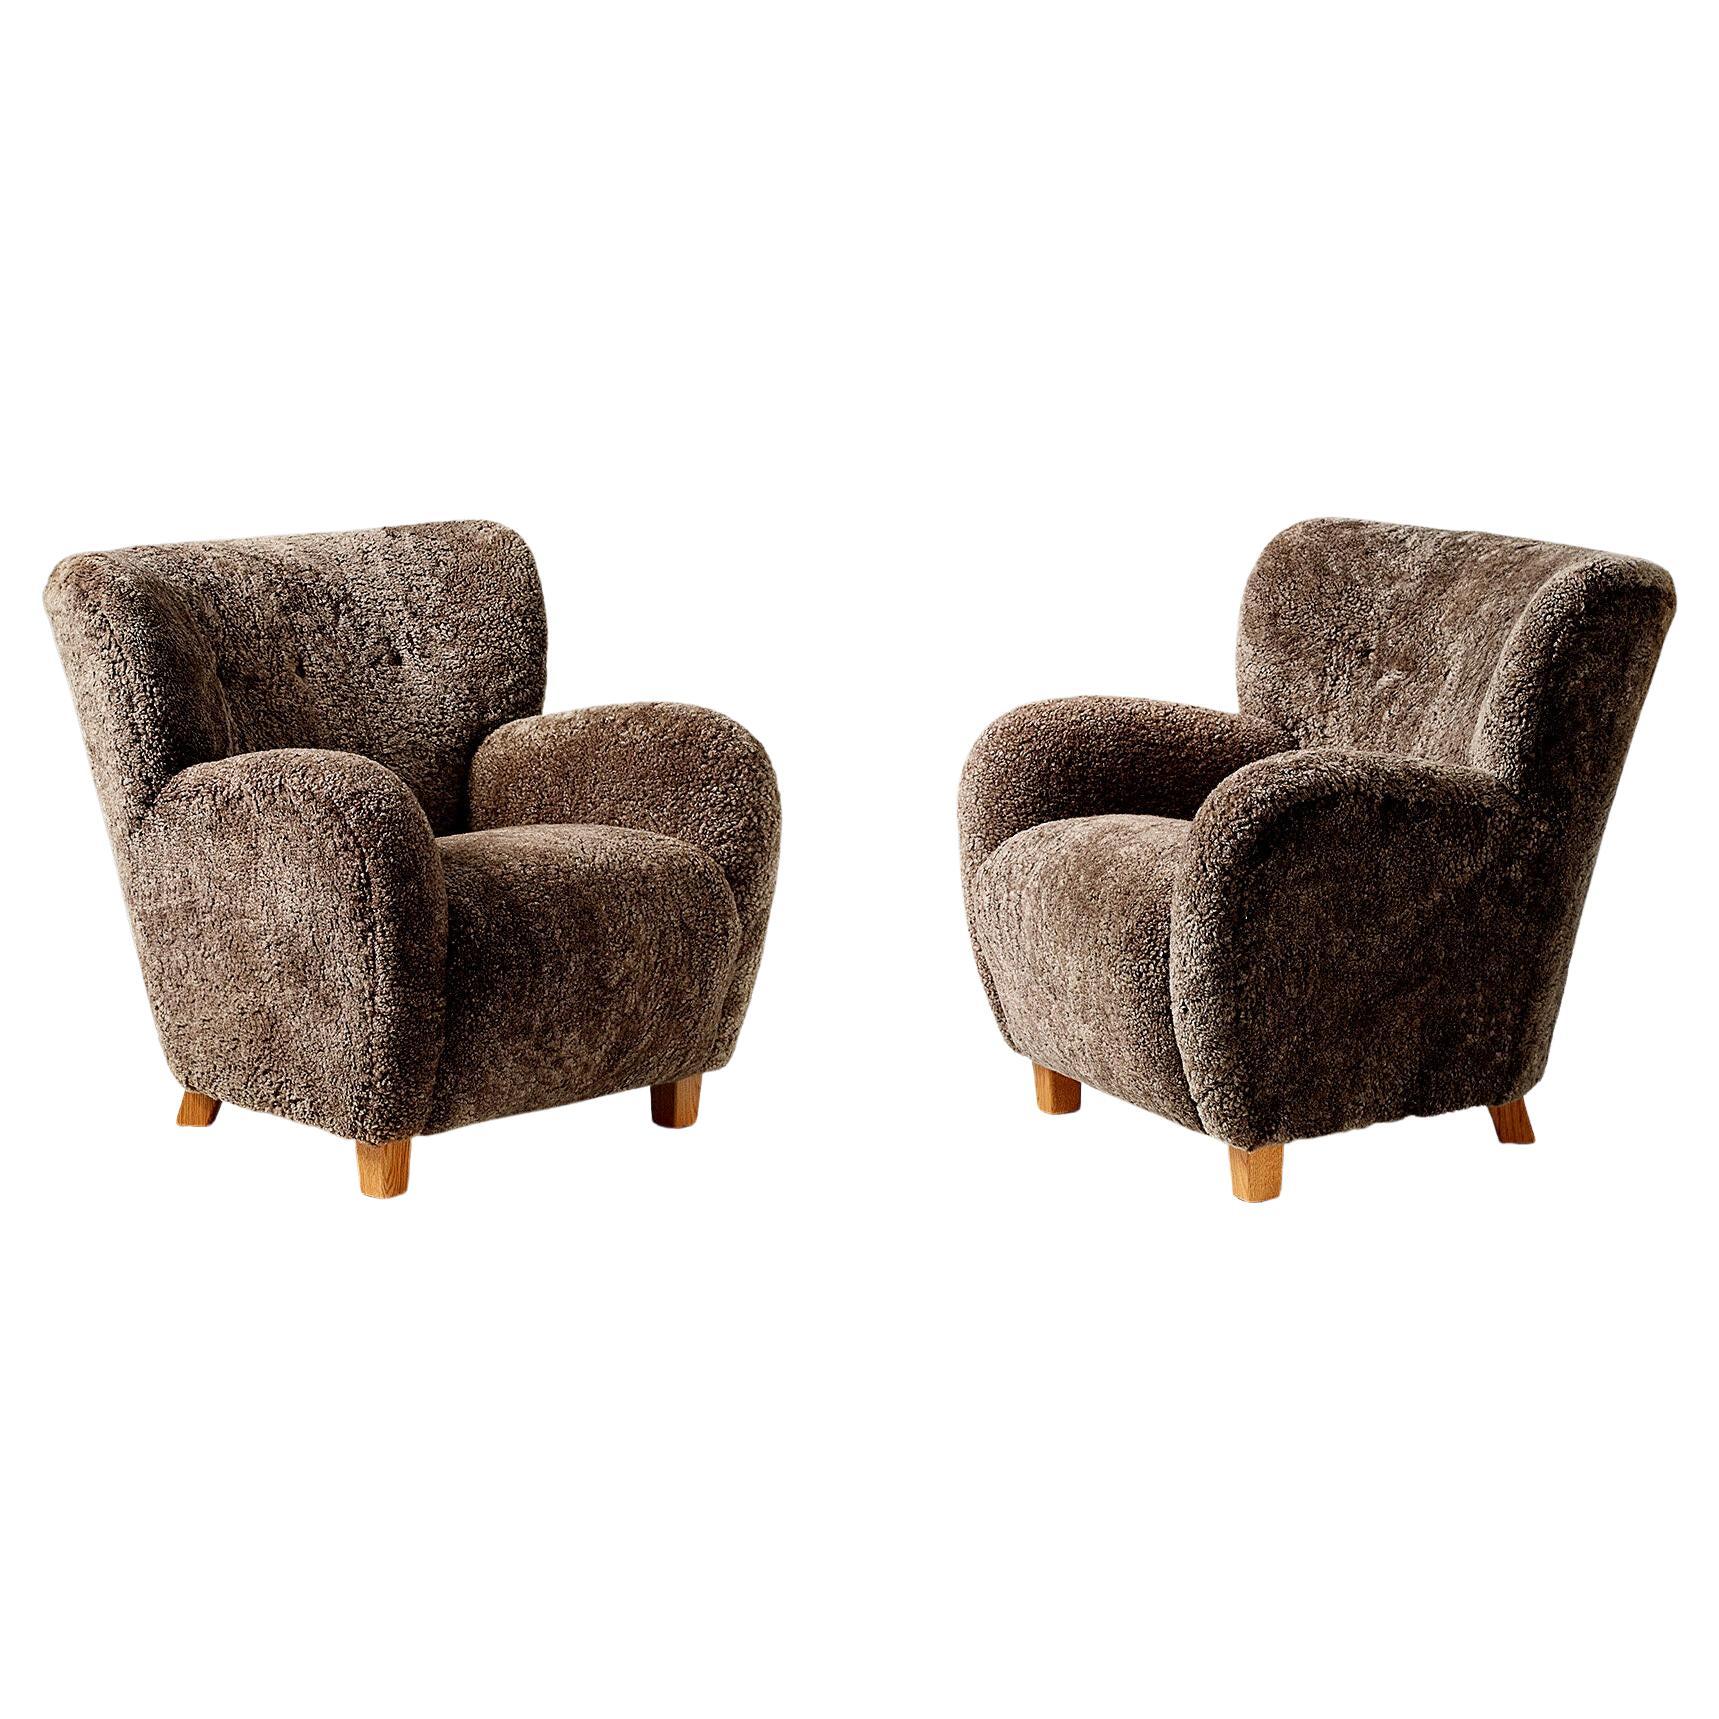 Pair of Custom Made Brown Sheepskin Lounge Chairs